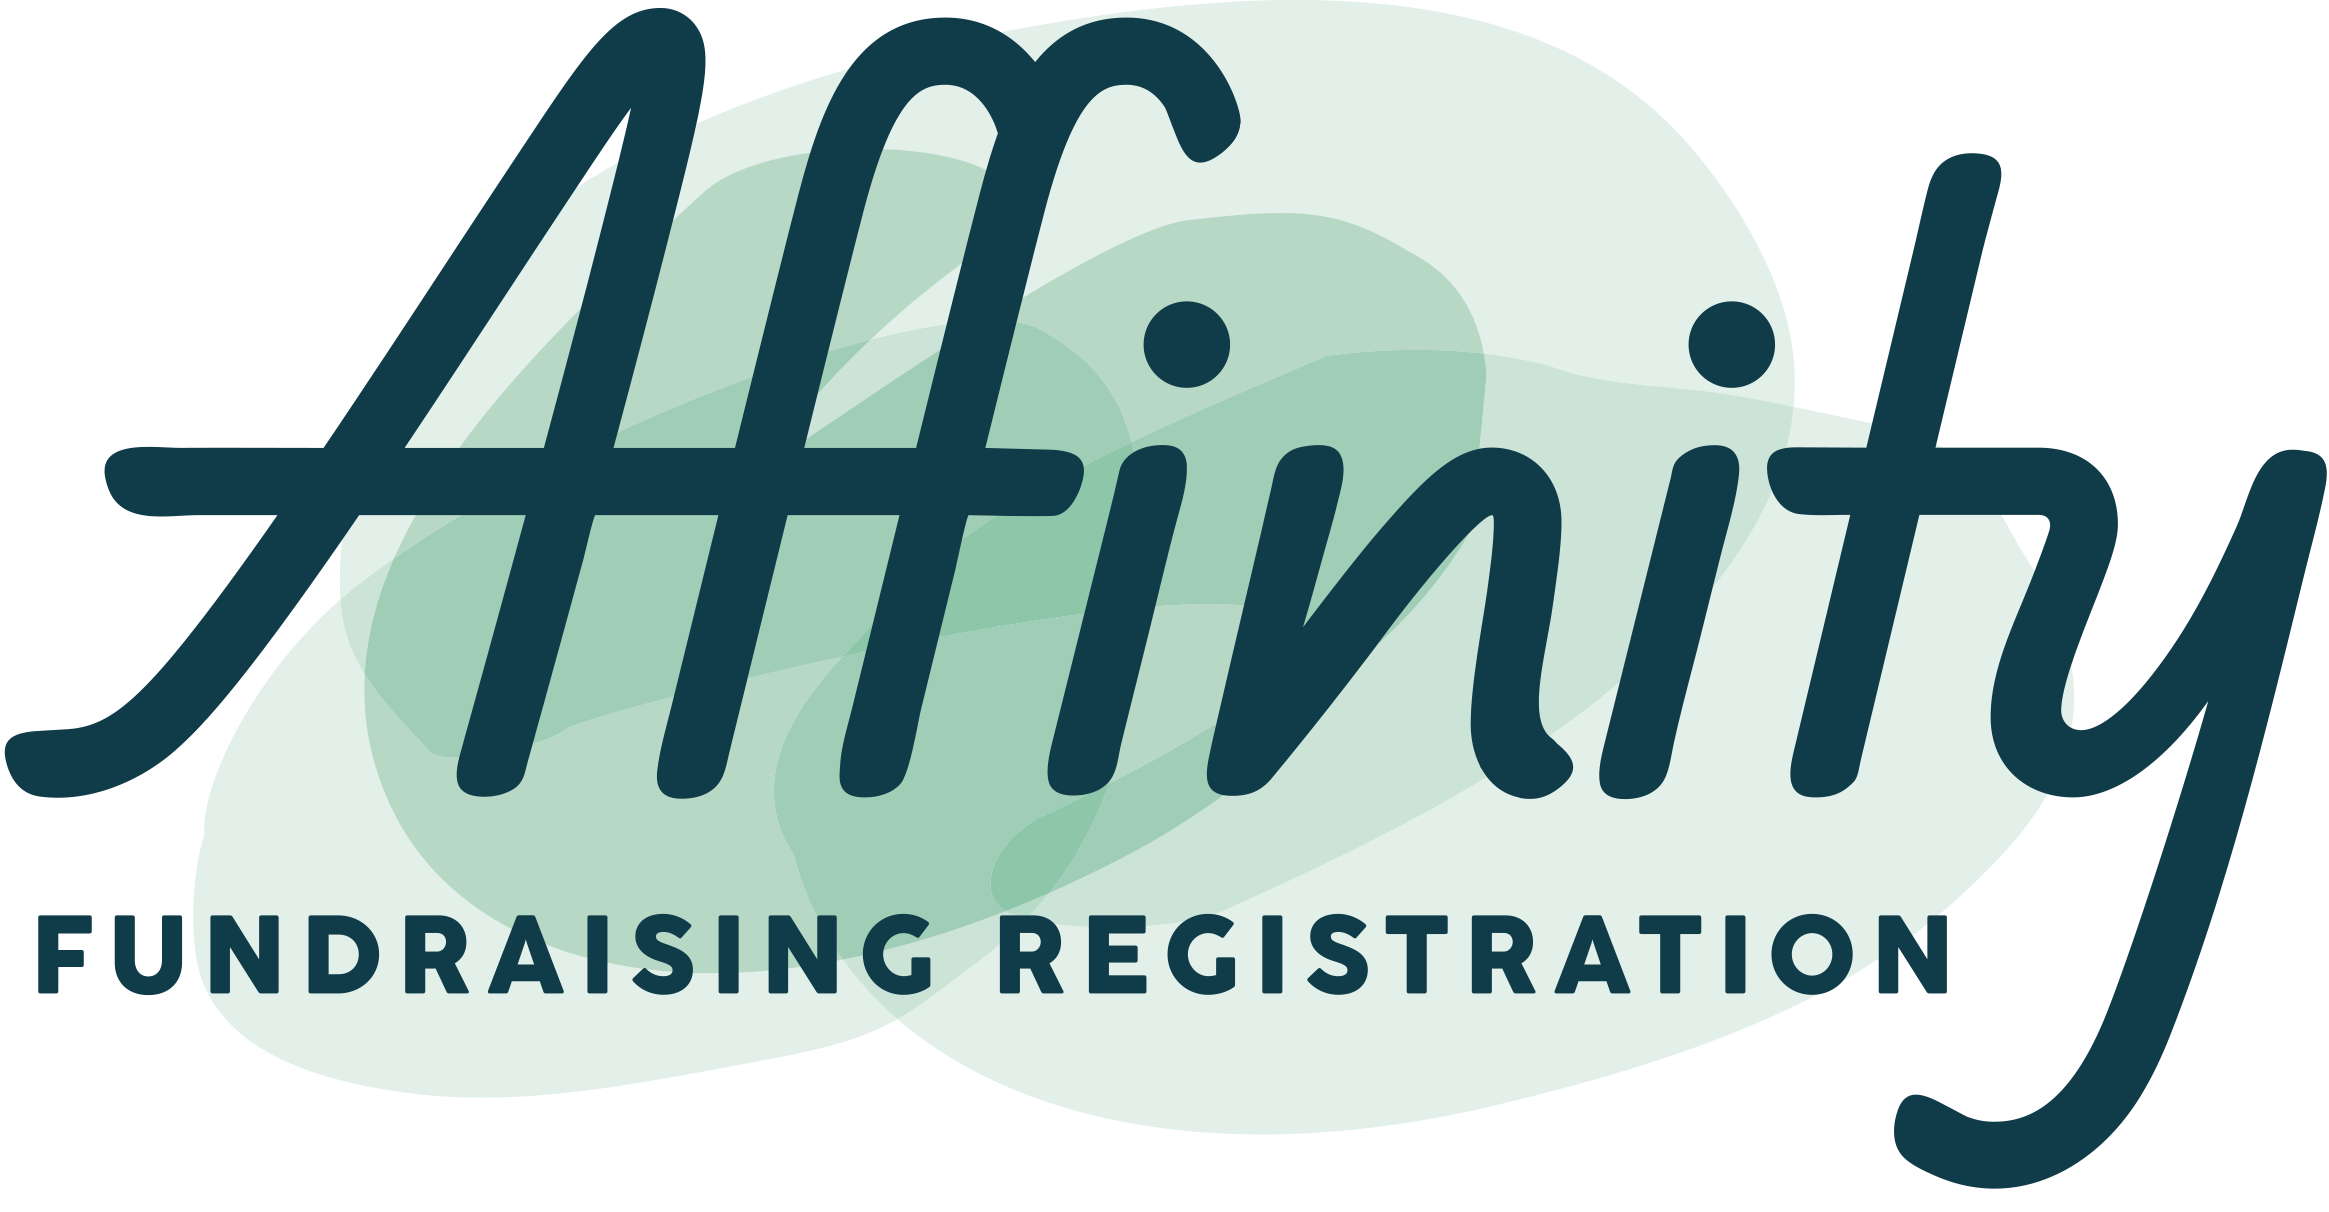 Affinity Fundraising Registration logo